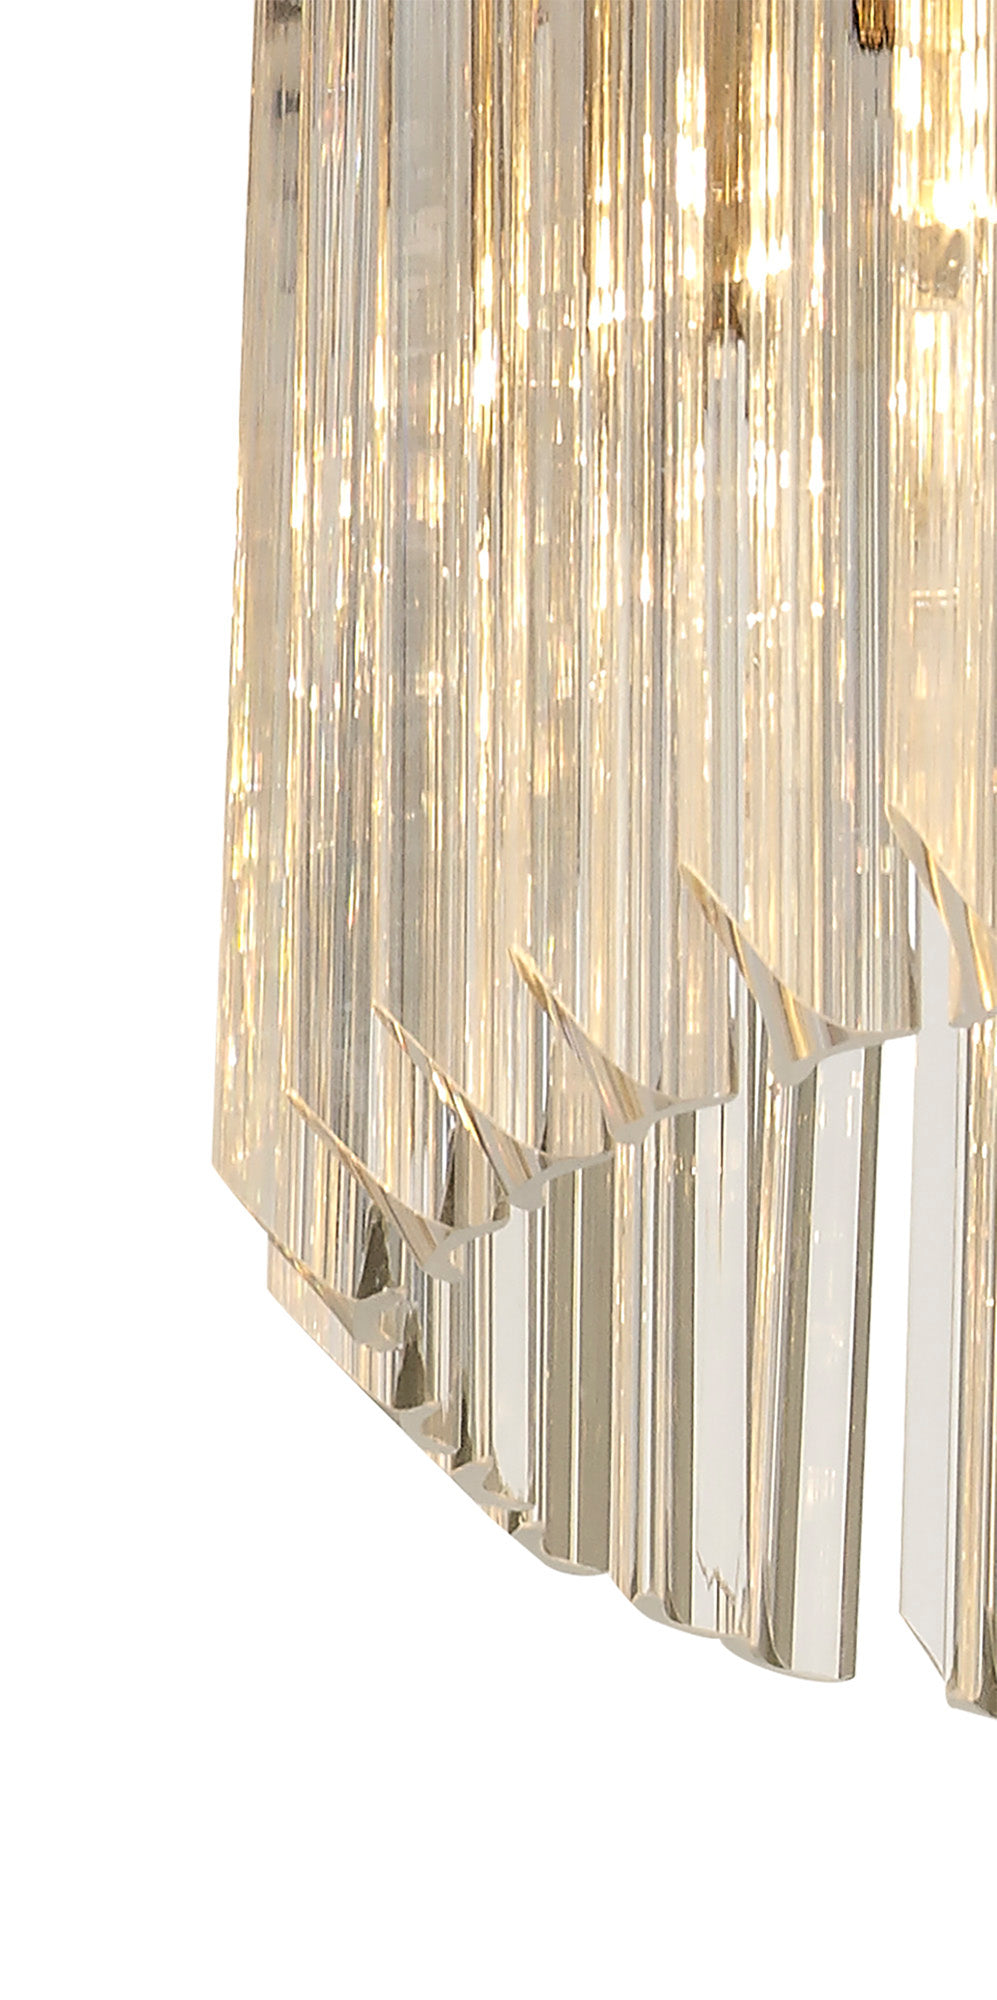 Knightsbridge Pendant Round 8 Light E14, Polished Nickel/Clear Glass - LO182363. Item Weight: 17.3kg